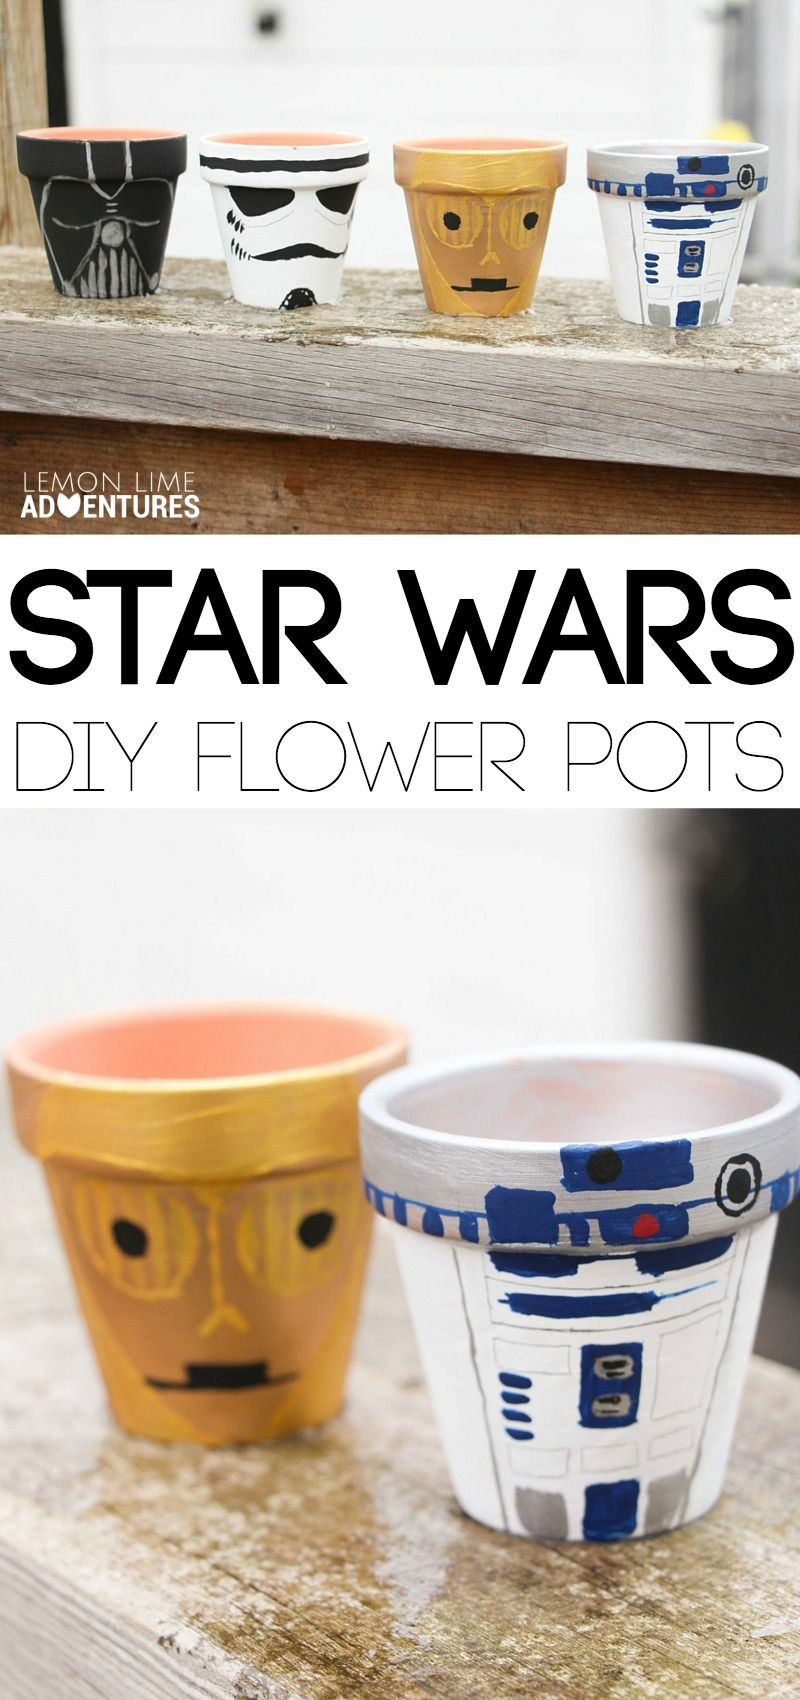 Star Wars Diy
 DIY Star Wars Garden Pots